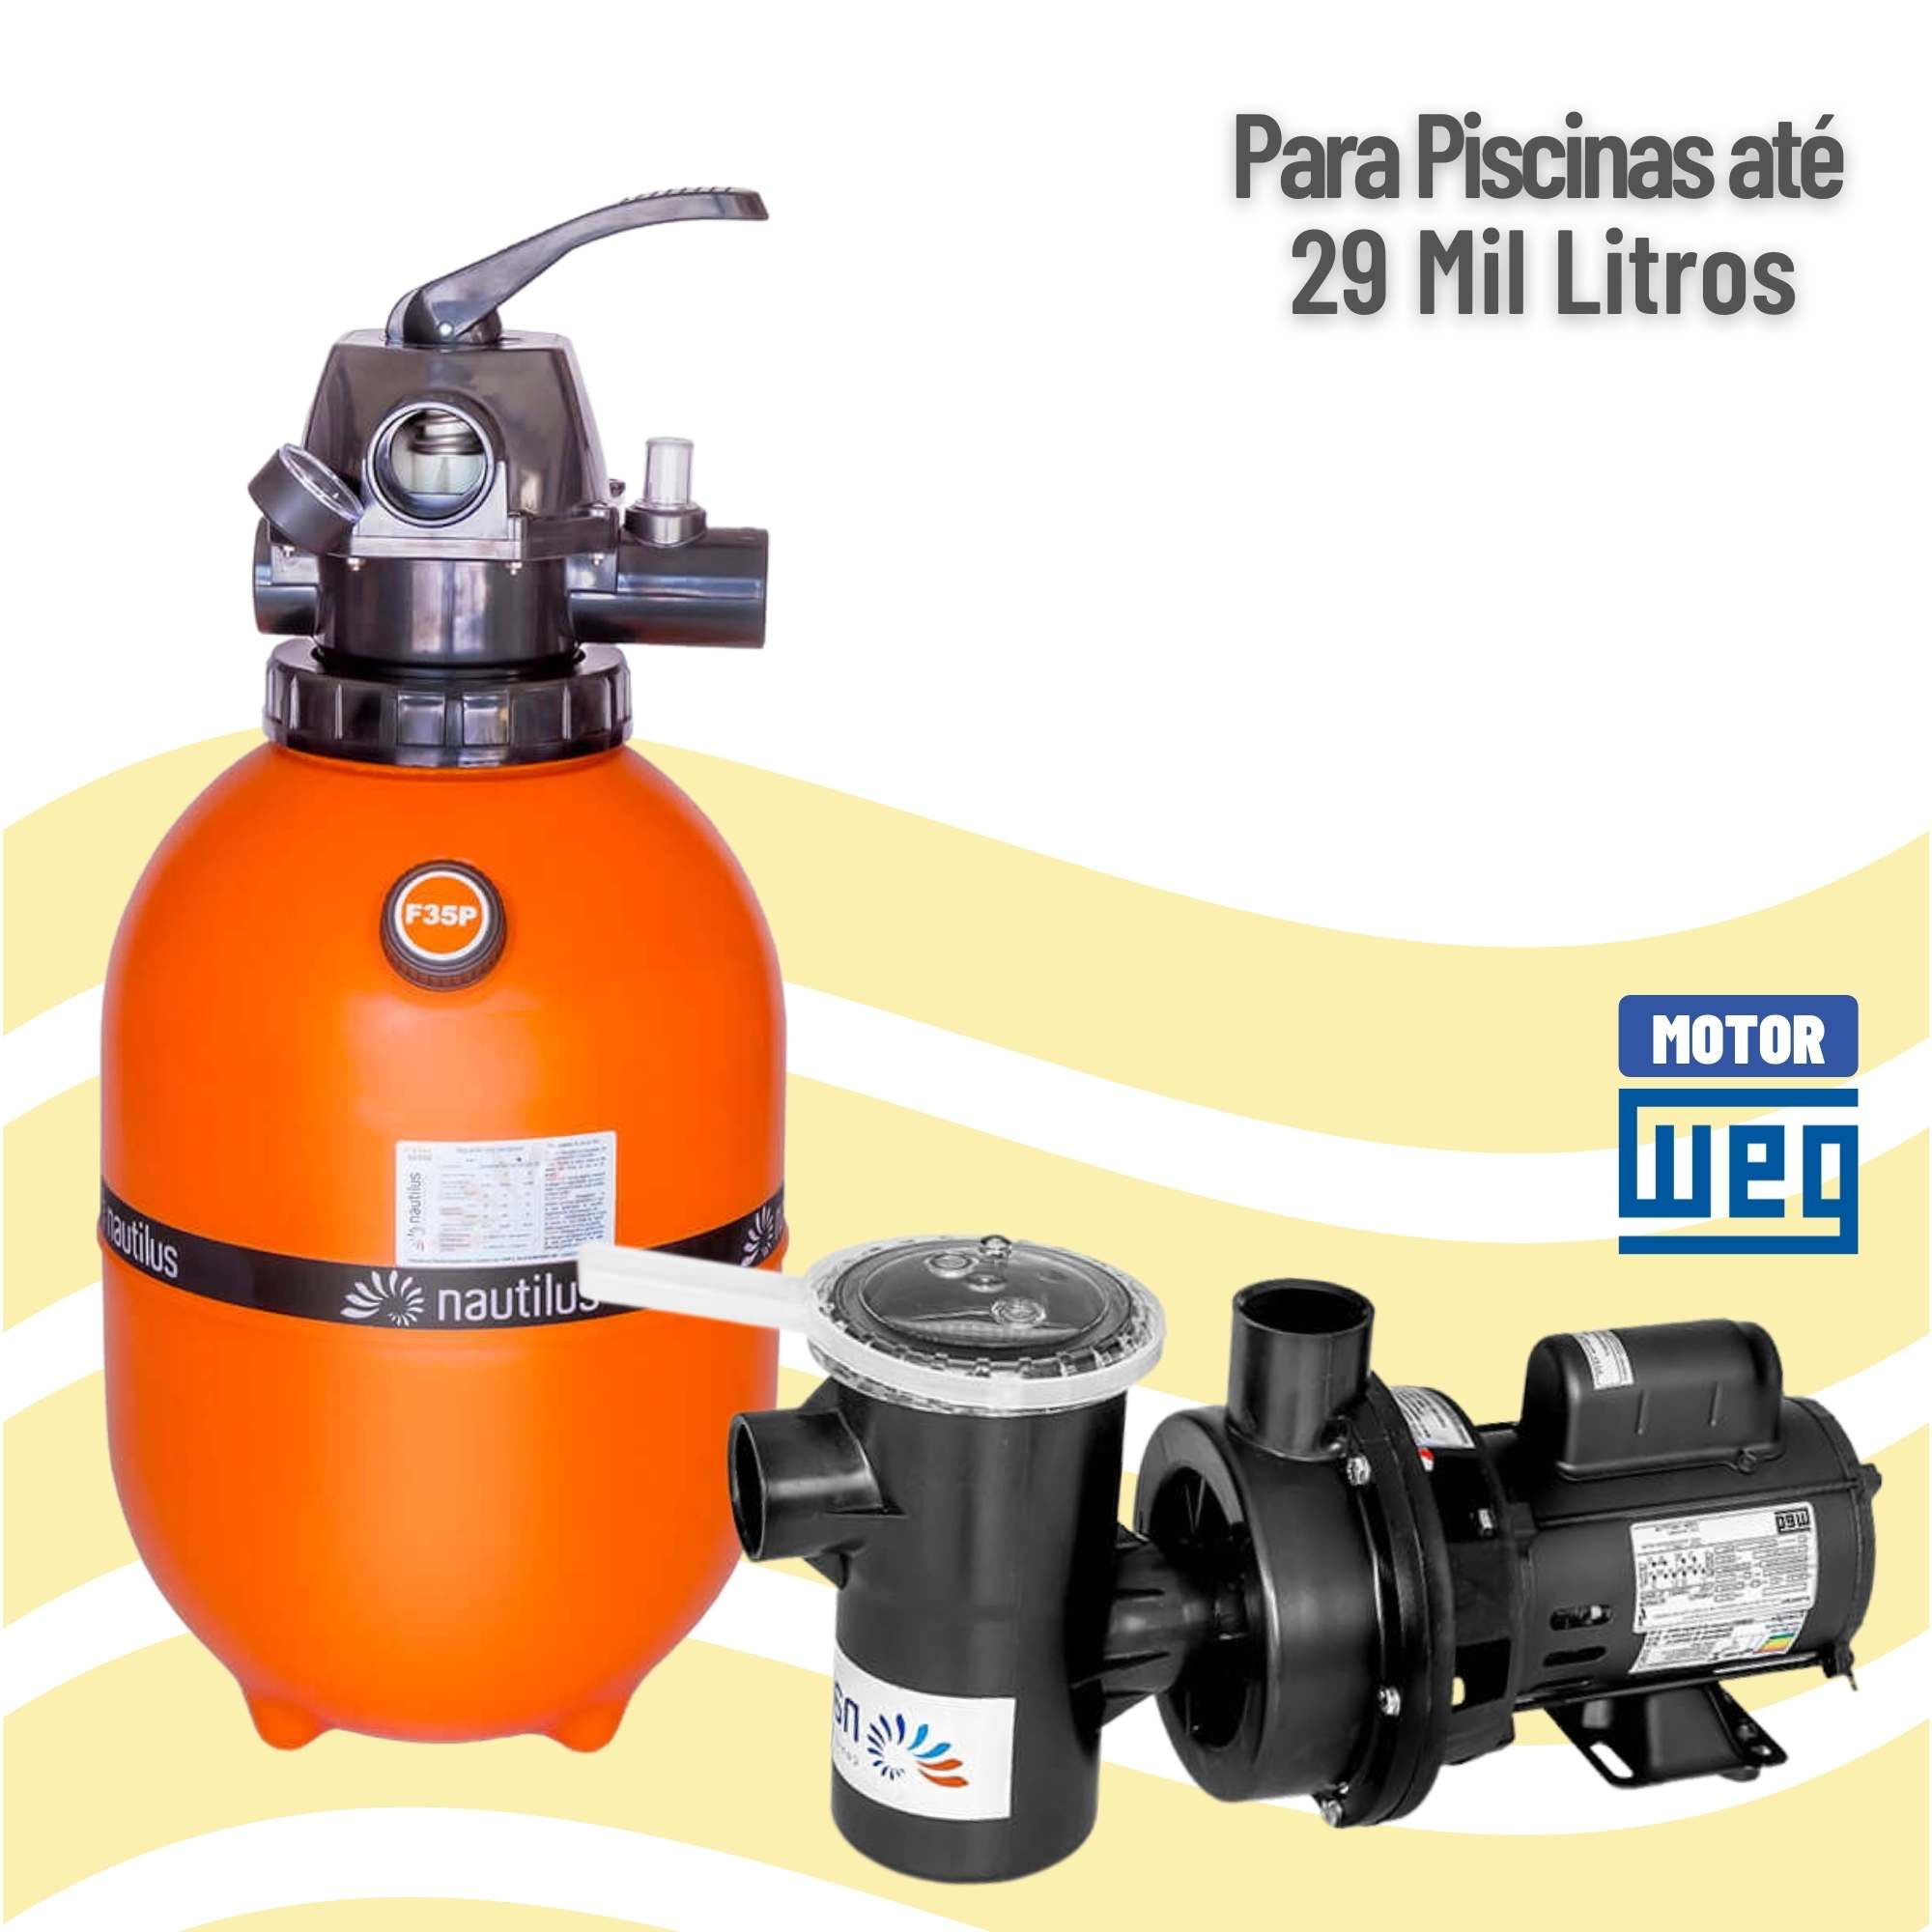 Conjunto Filtro e Motobomba 1/3cv para Piscina até 29 Mil Litros - Nautilus - Sol e Água Piscinas e Acessórios